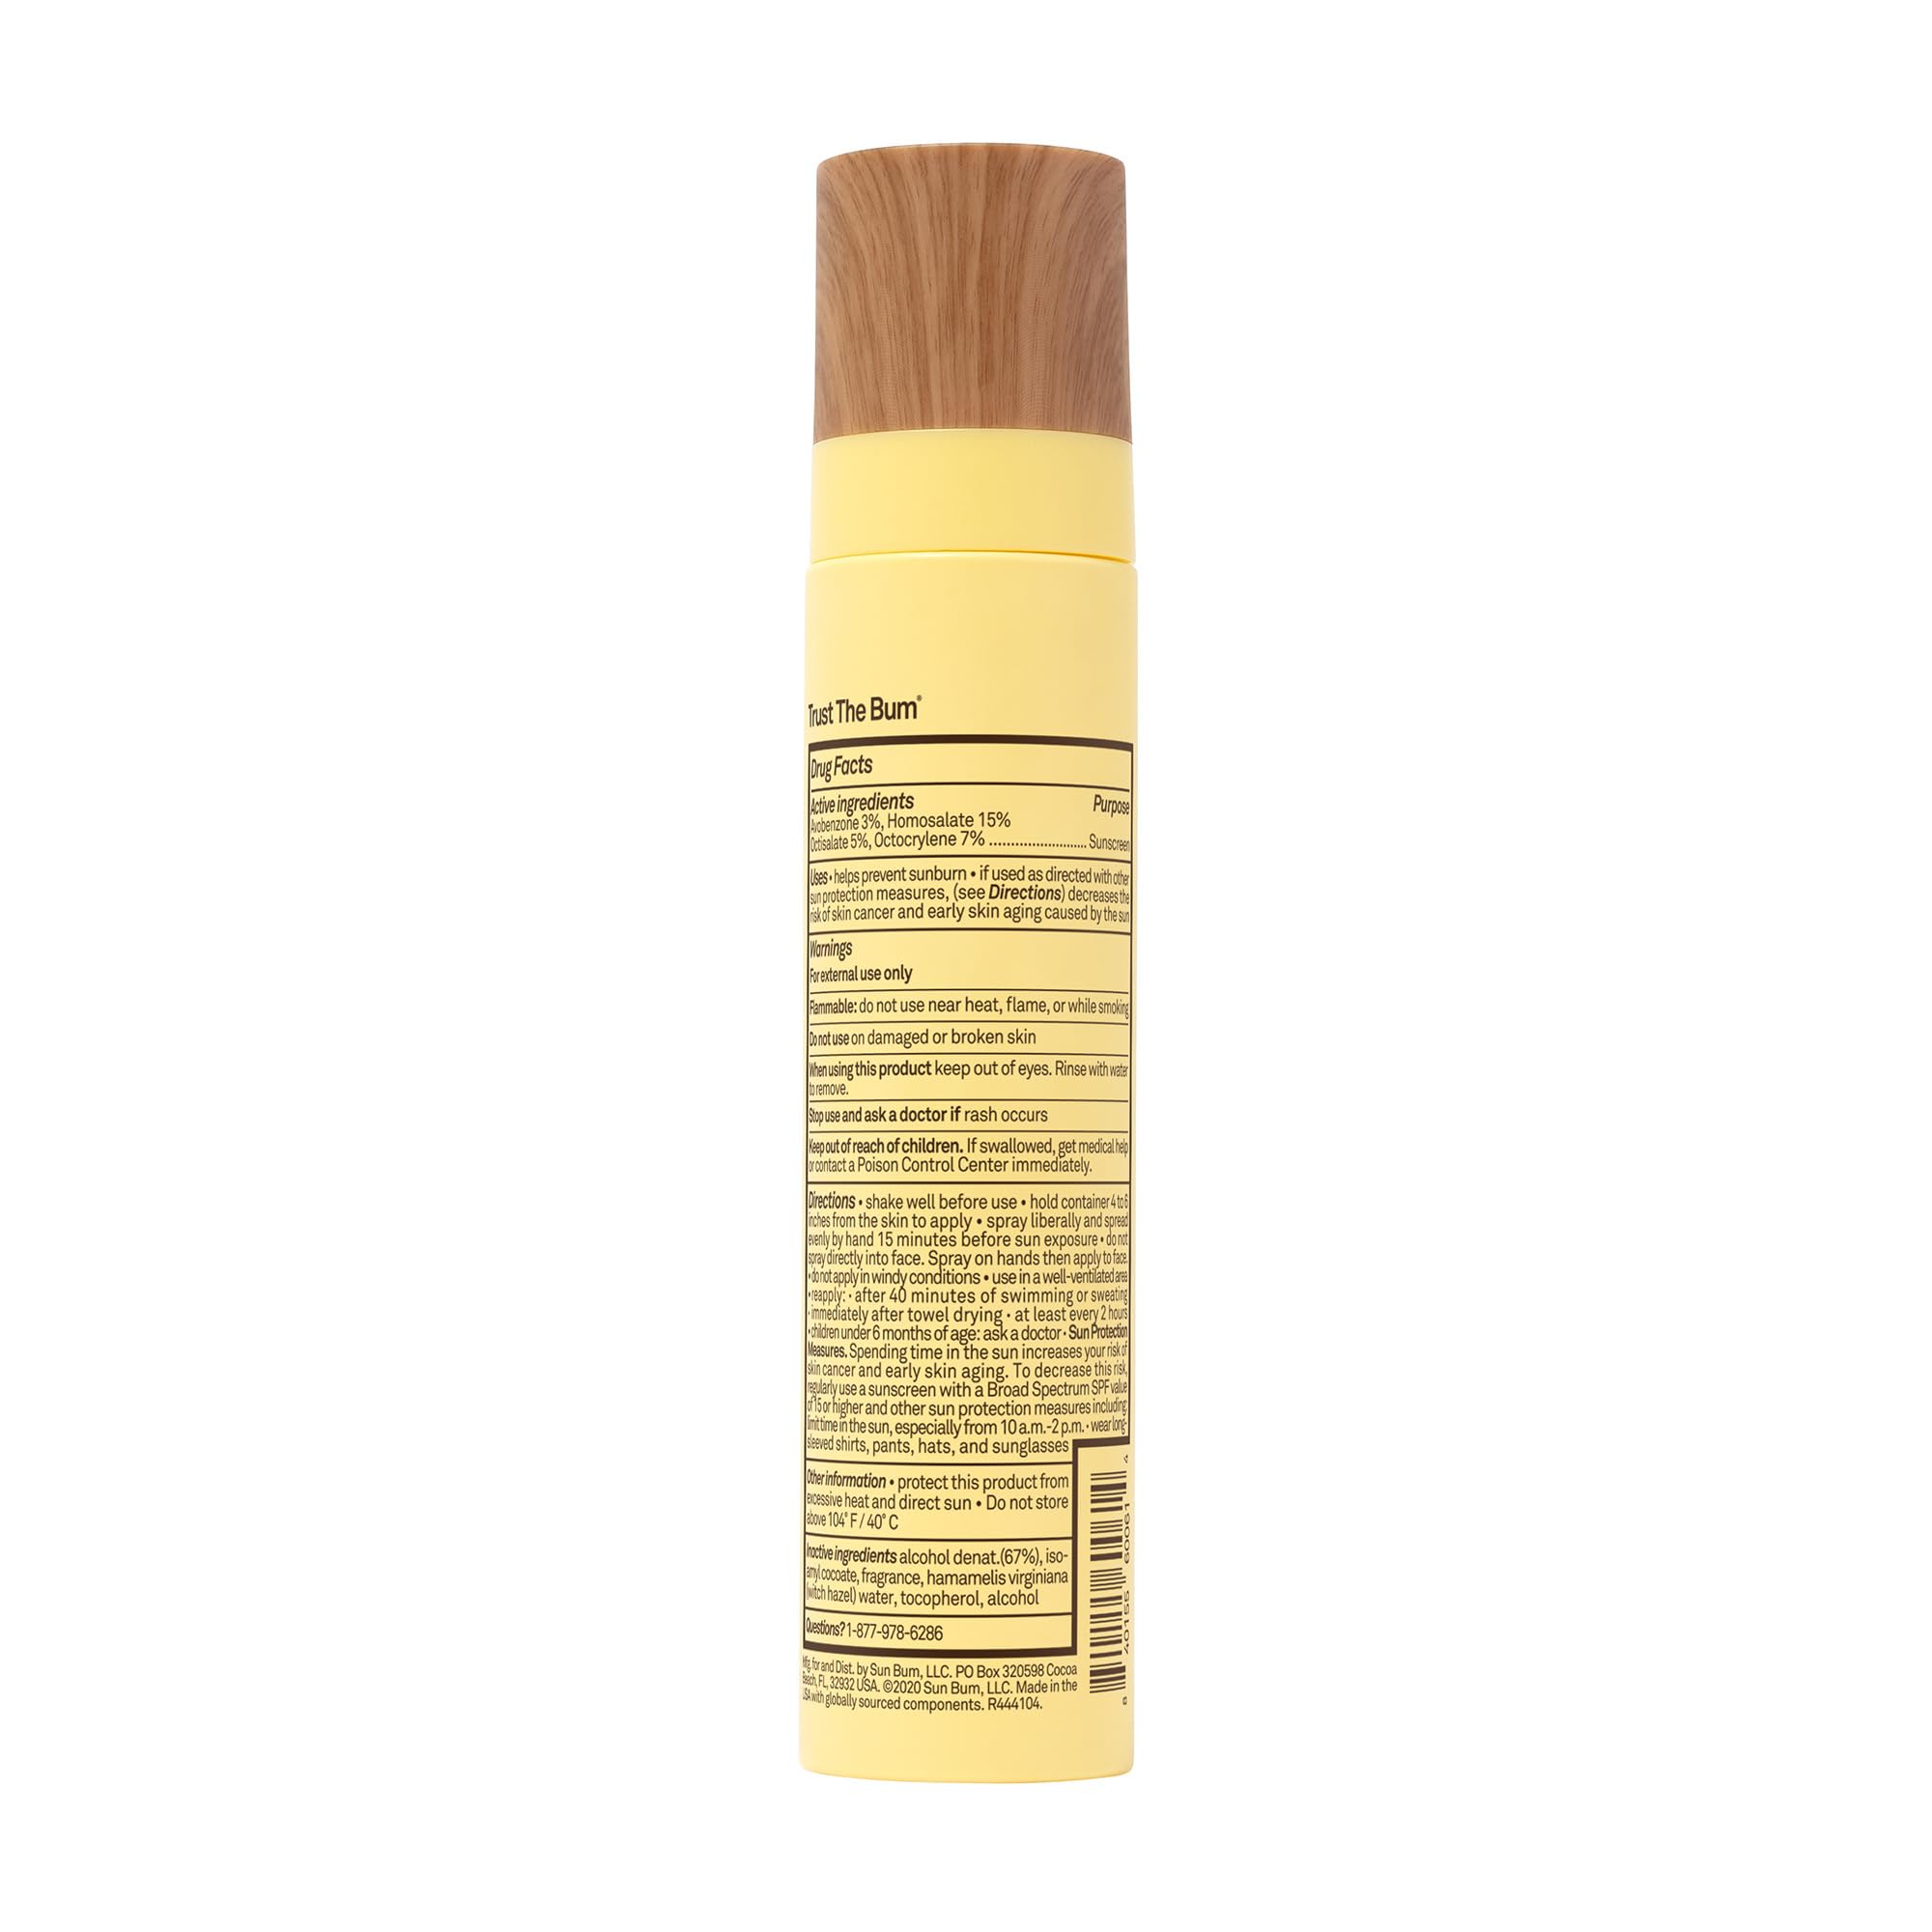 Sun Bum Original SPF 45 Sunscreen Face Mist | Vegan and Hawaii 104 Reef Act Compliant (Octinoxate & Oxybenzone Free) Broad Spectrum Moisturizing UVA/UVB Sunscreen with Witch Hazel | 3.4 oz